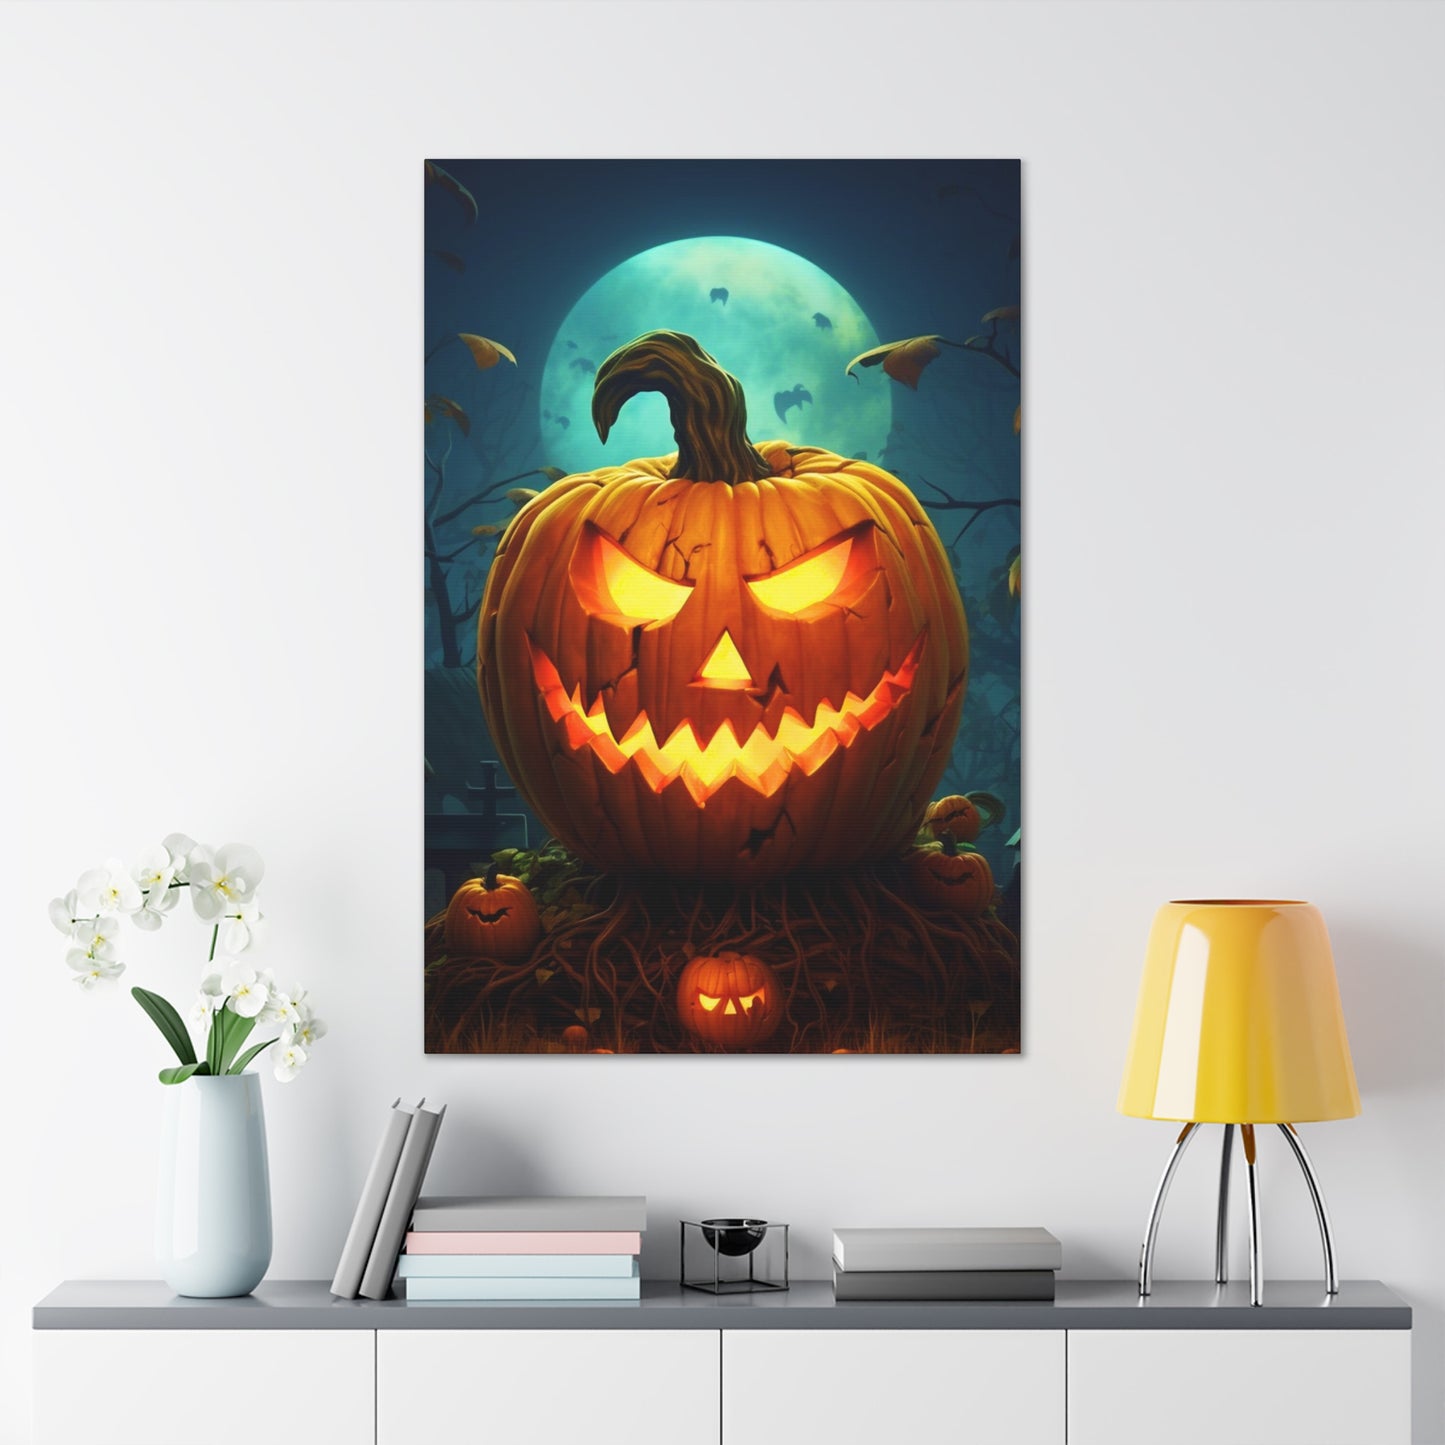 Halloween pumpkin animation decorations